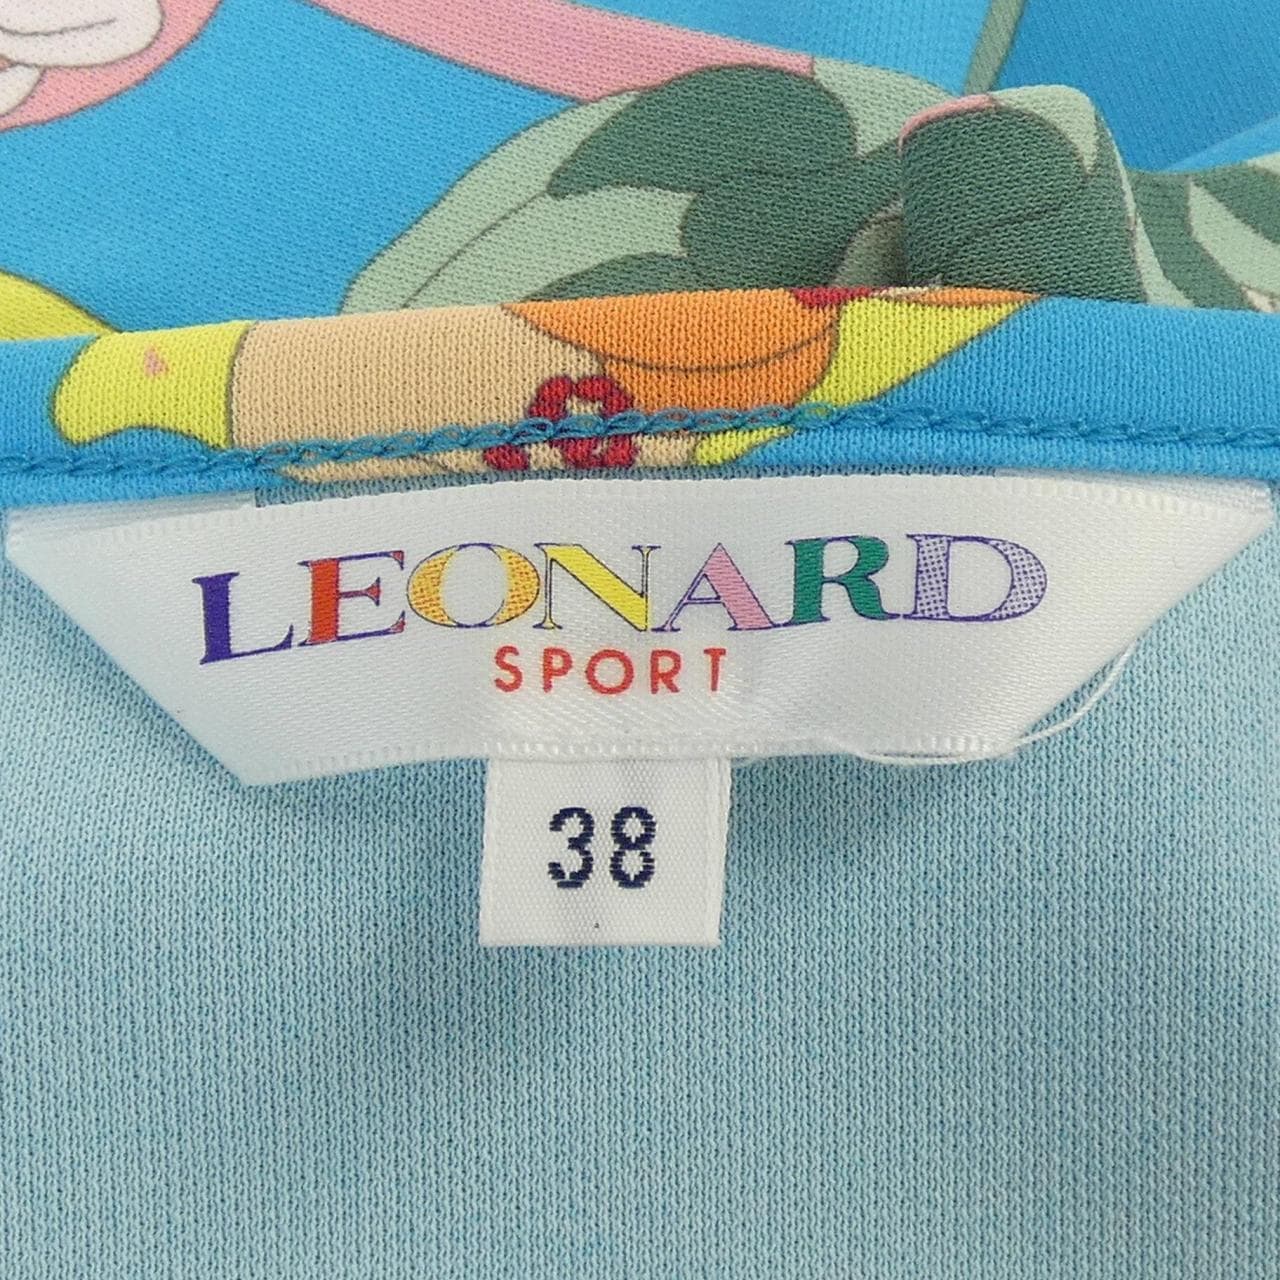 Leonard Sport LEONARD SPORT Tops